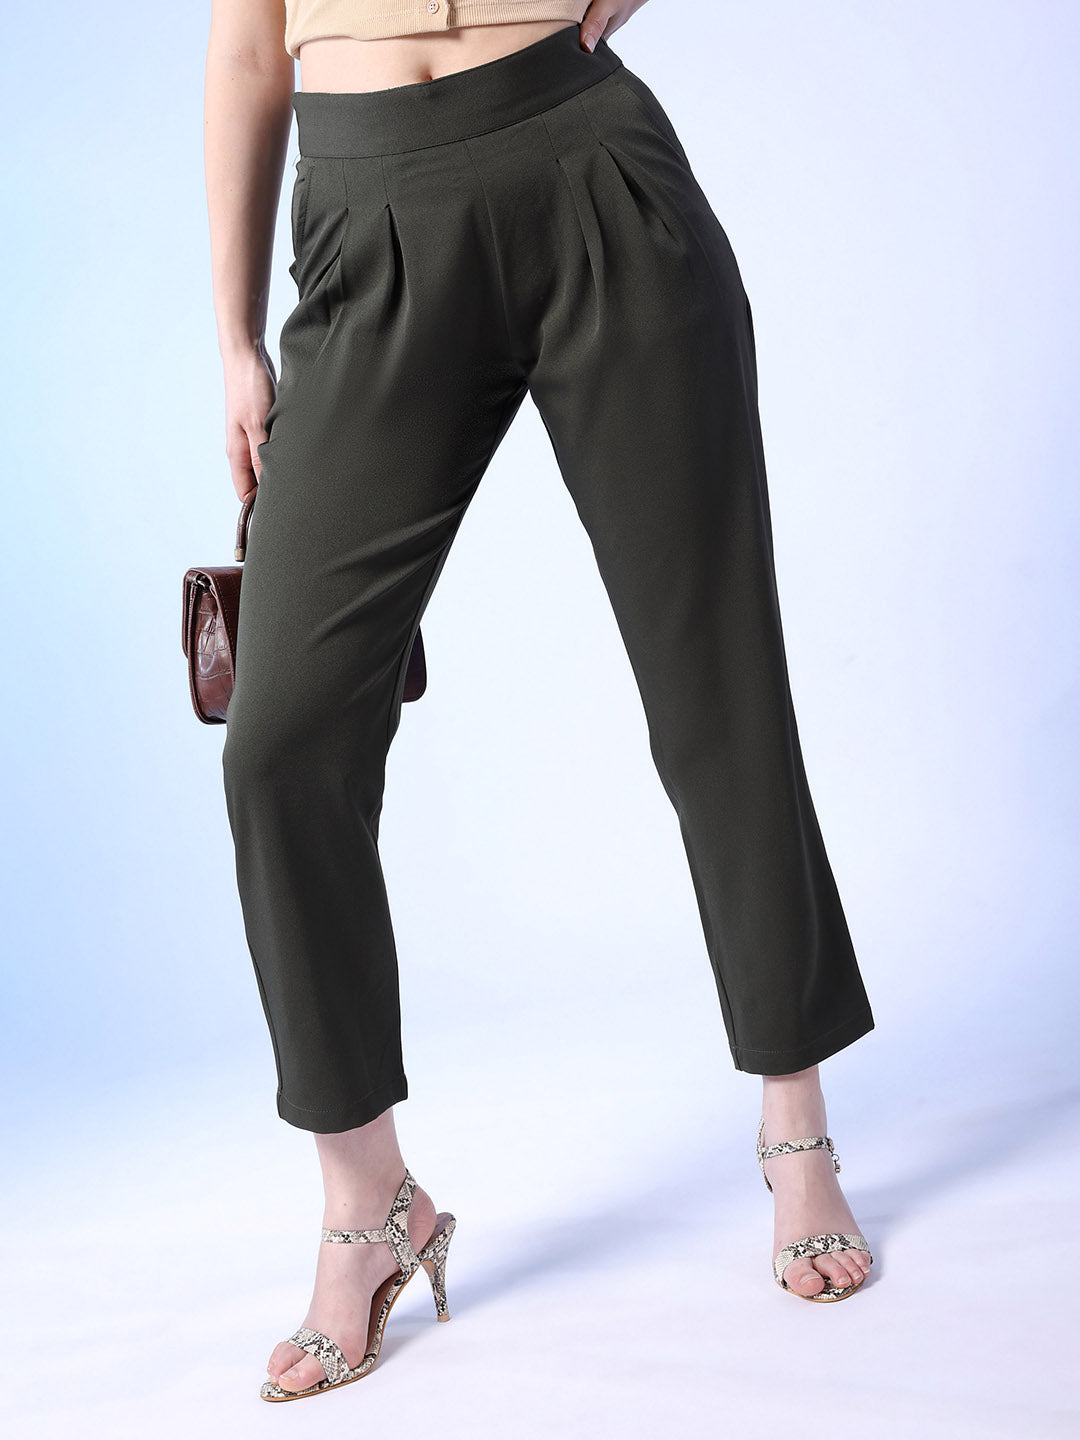 Shop Women Solid Trousers Online.